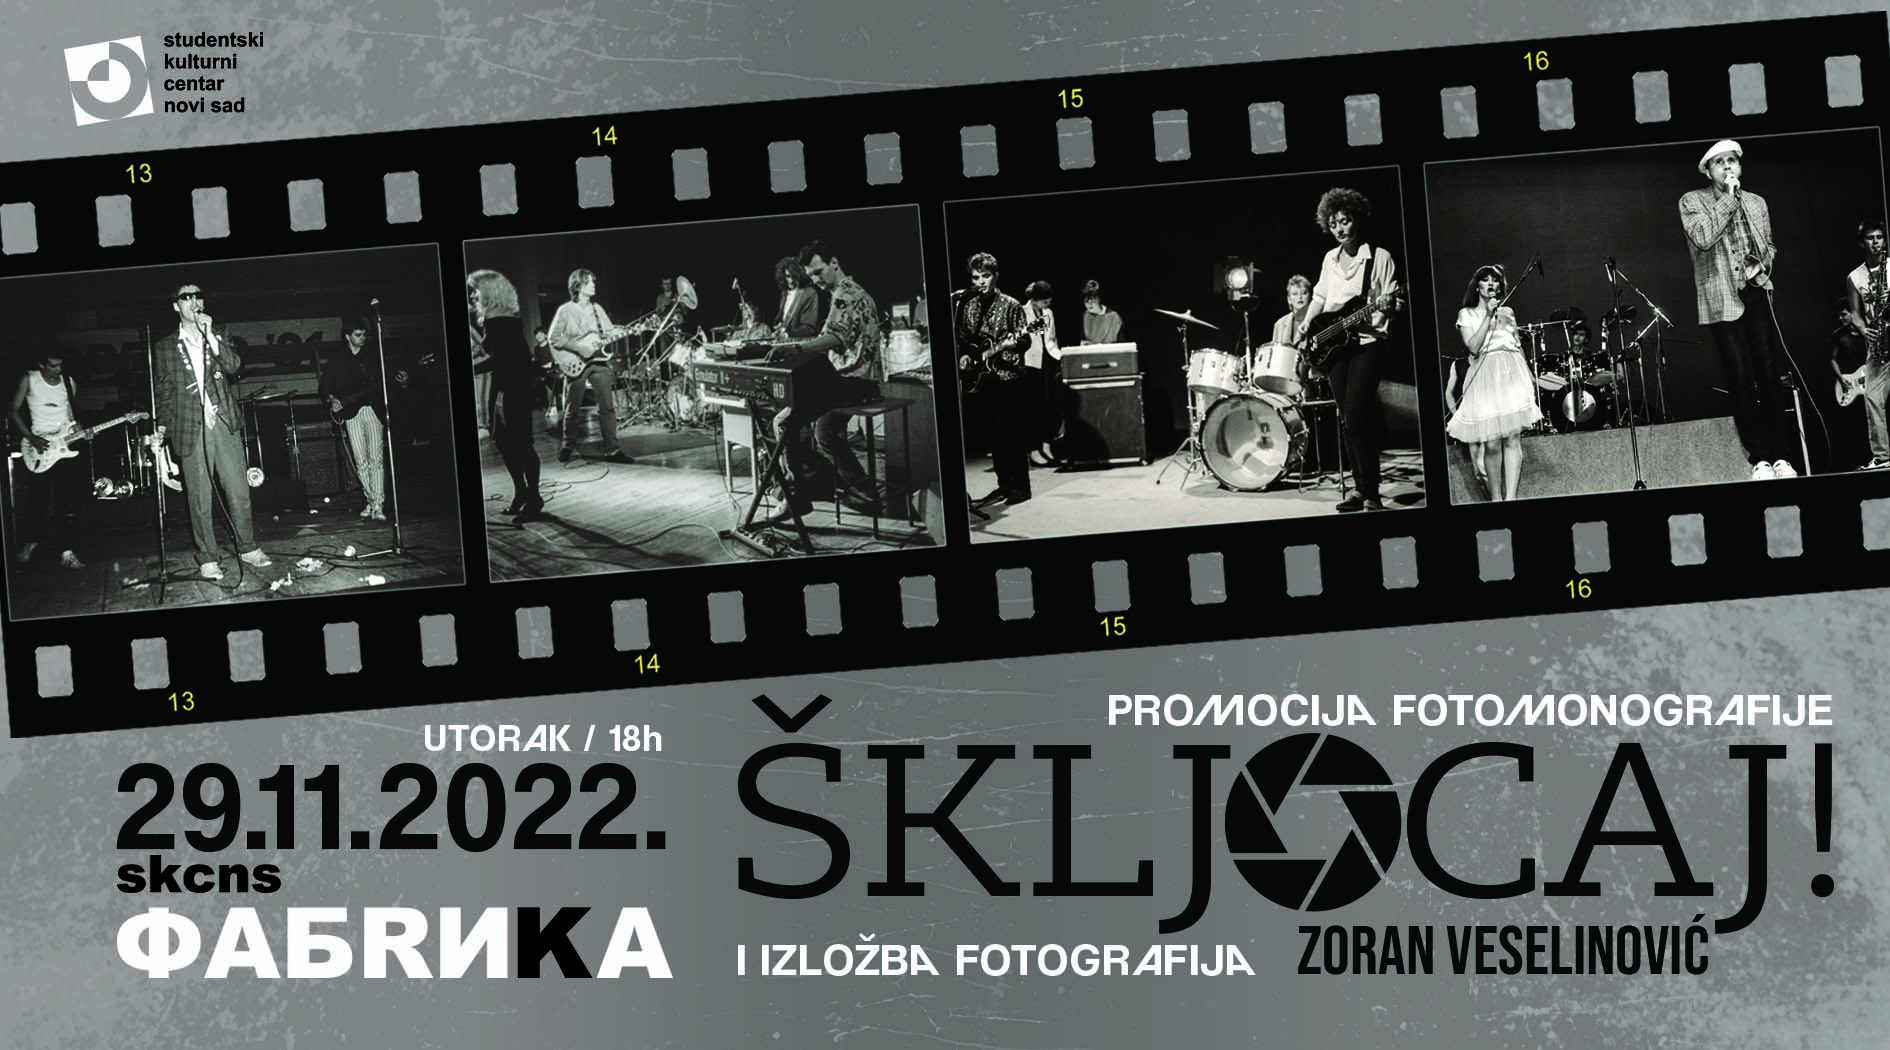 Otvaranje izložbe fotografija Zorana Veselinovića i promocija fotomonografije “Škljocaj” SKCNS Fabrika